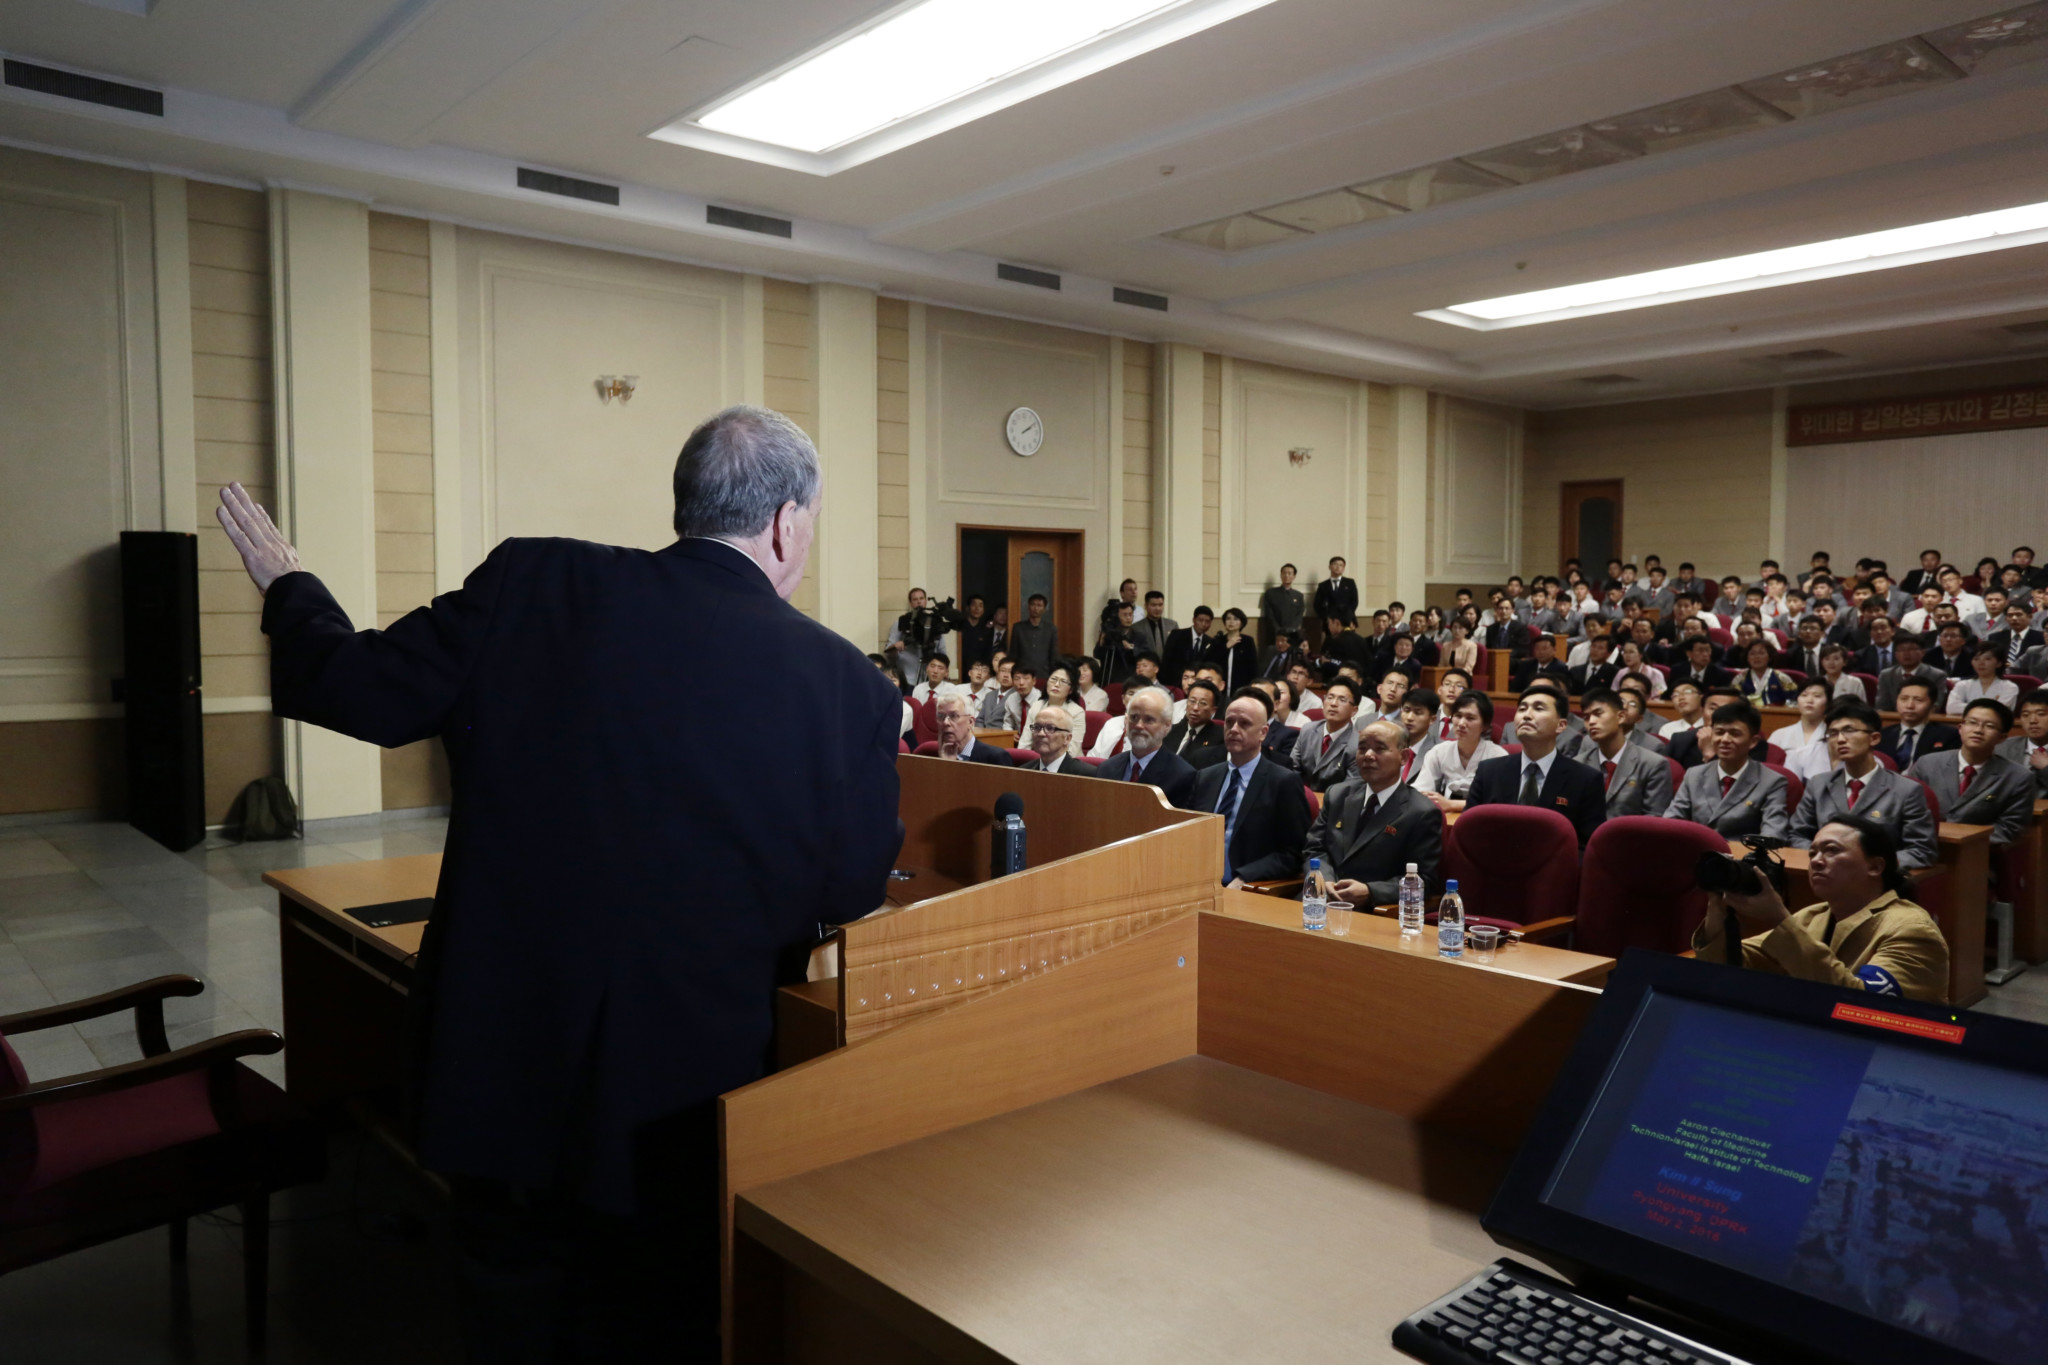 16 Nobel Laureate Prof. Aaron Ciechanover at his Keynote Speech at Kim Il Sung University